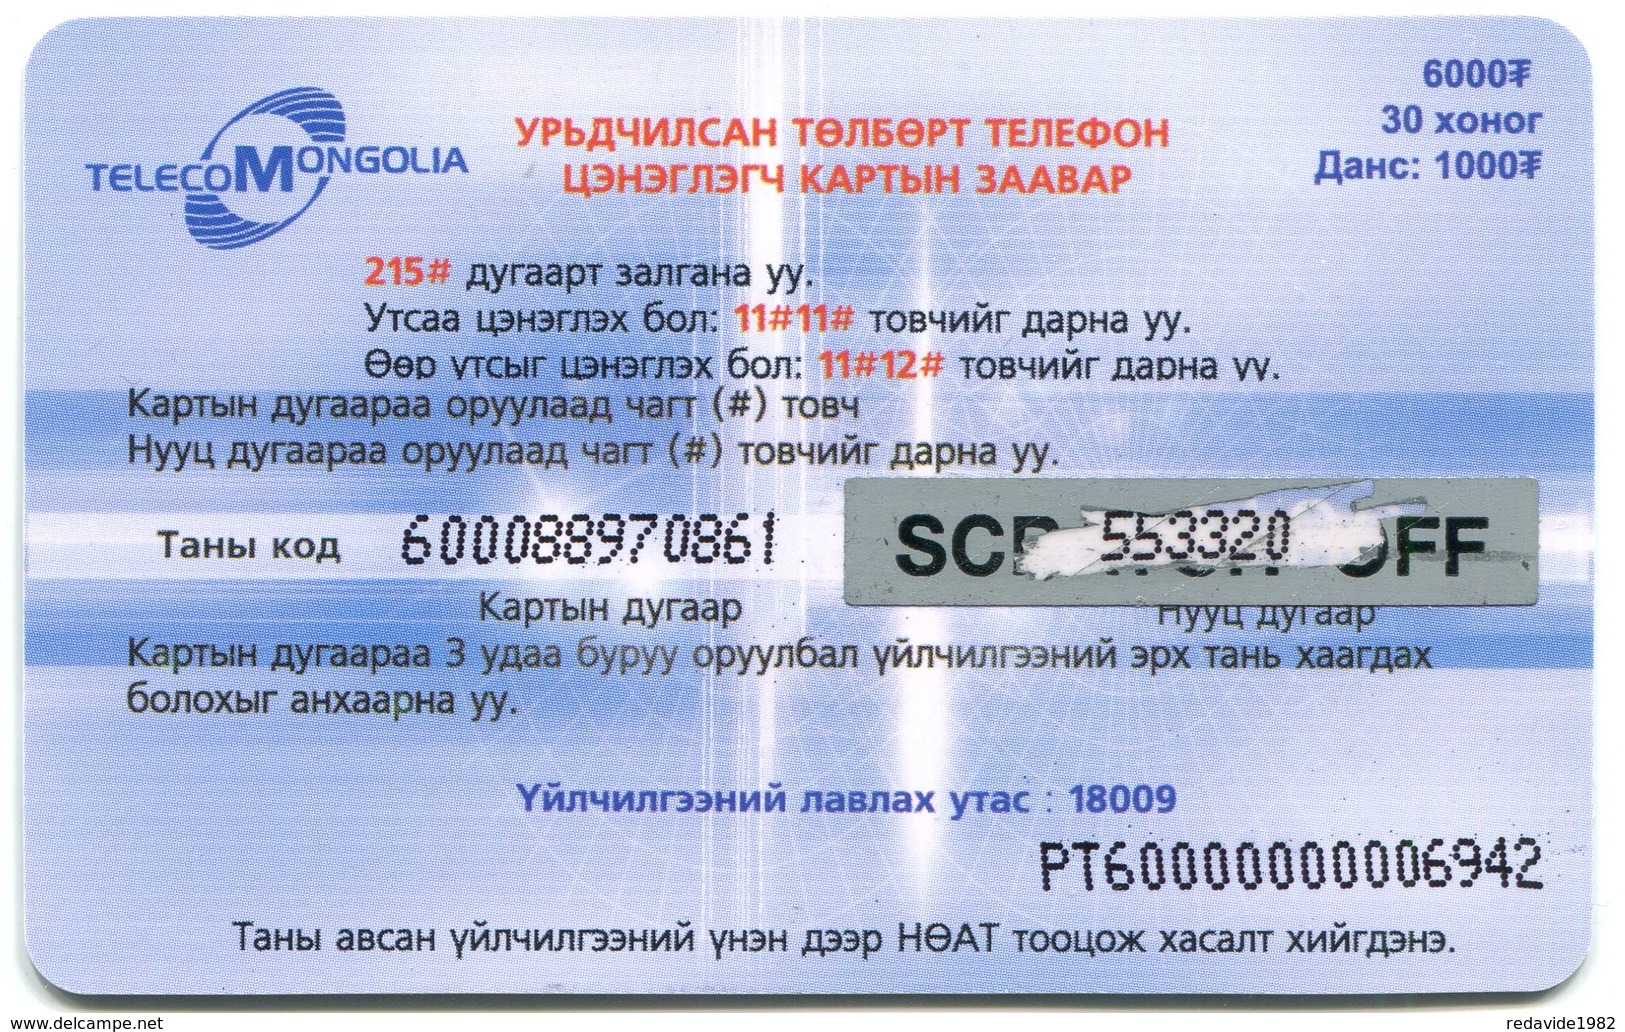 Telecom Mongolia - High Flight (Prepaid Card) - Mongolia